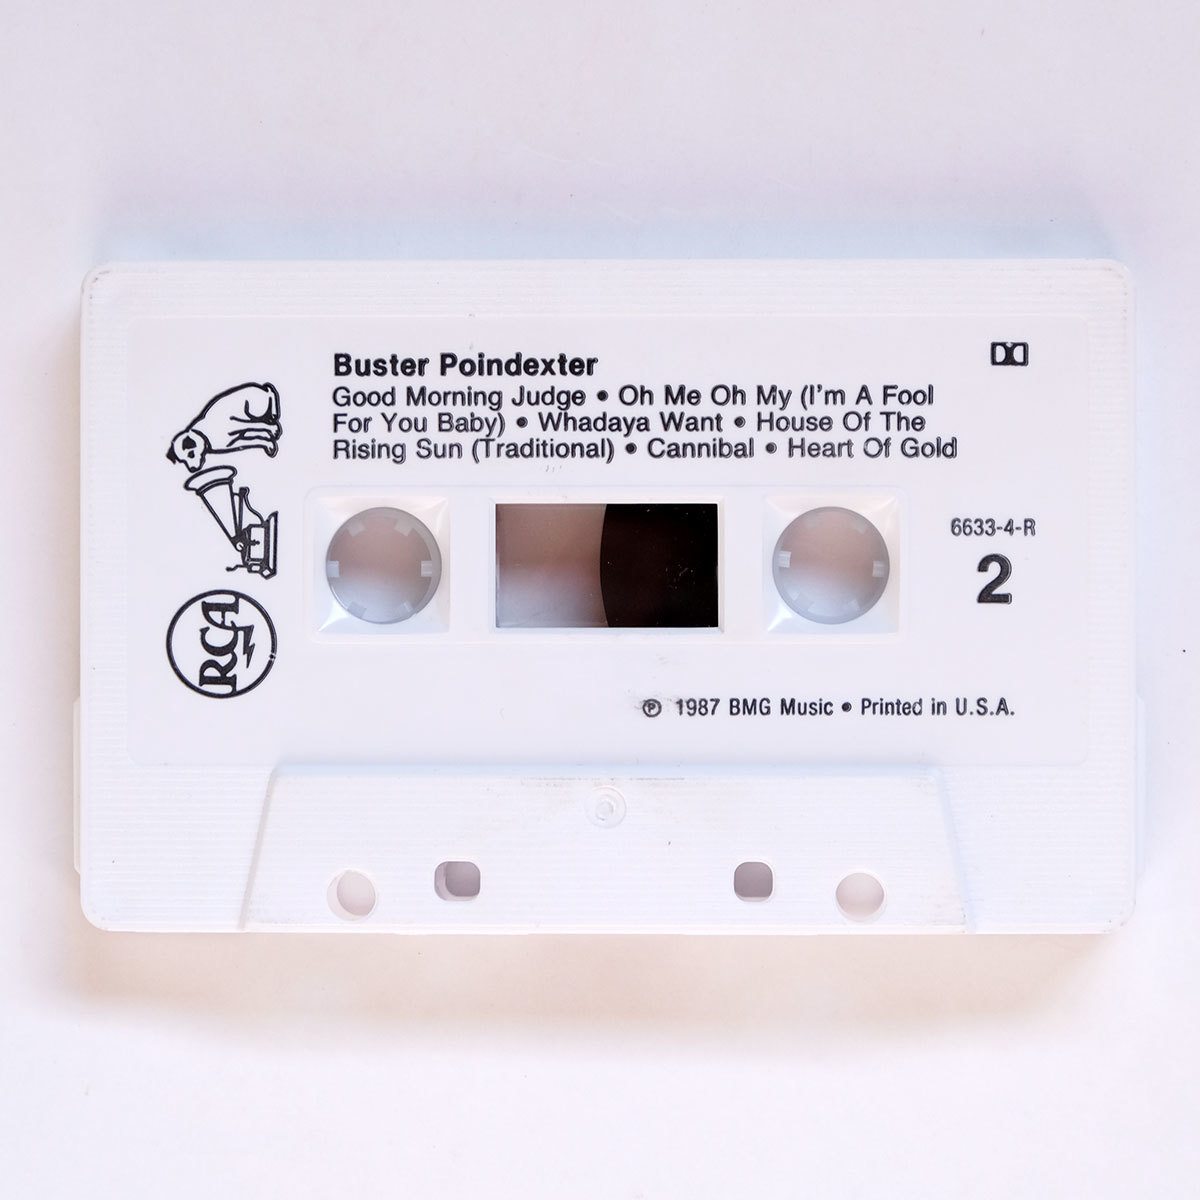 {US version cassette tape }Buster Poindexter* Buster po in Dexter /New York Dolls/ New York doll z/ David yo Hansen 